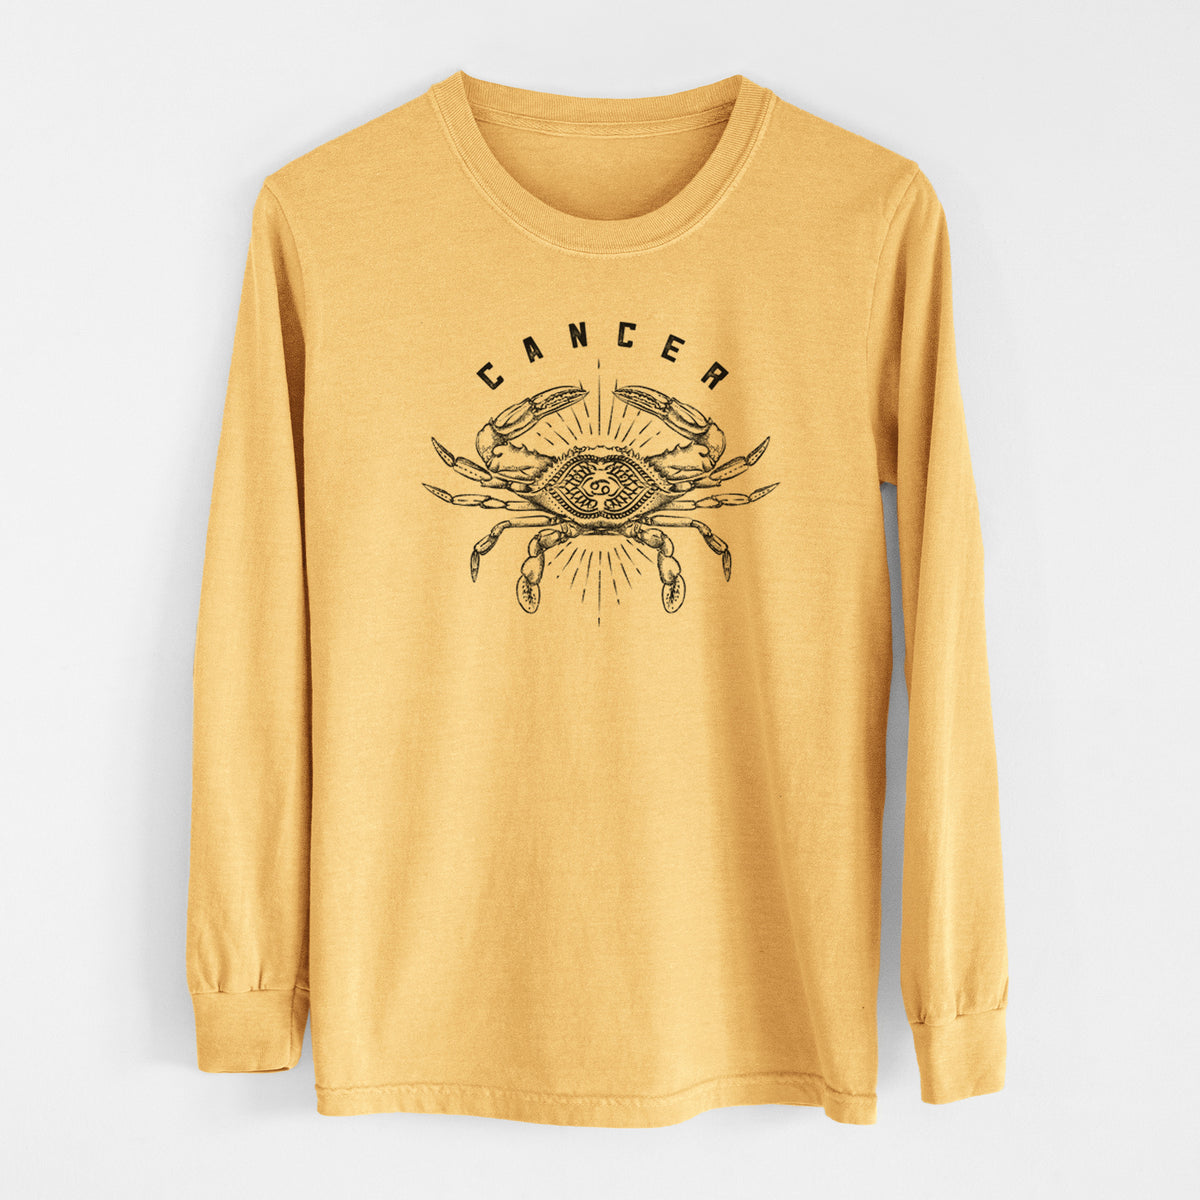 Cancer - Crab - Heavyweight 100% Cotton Long Sleeve